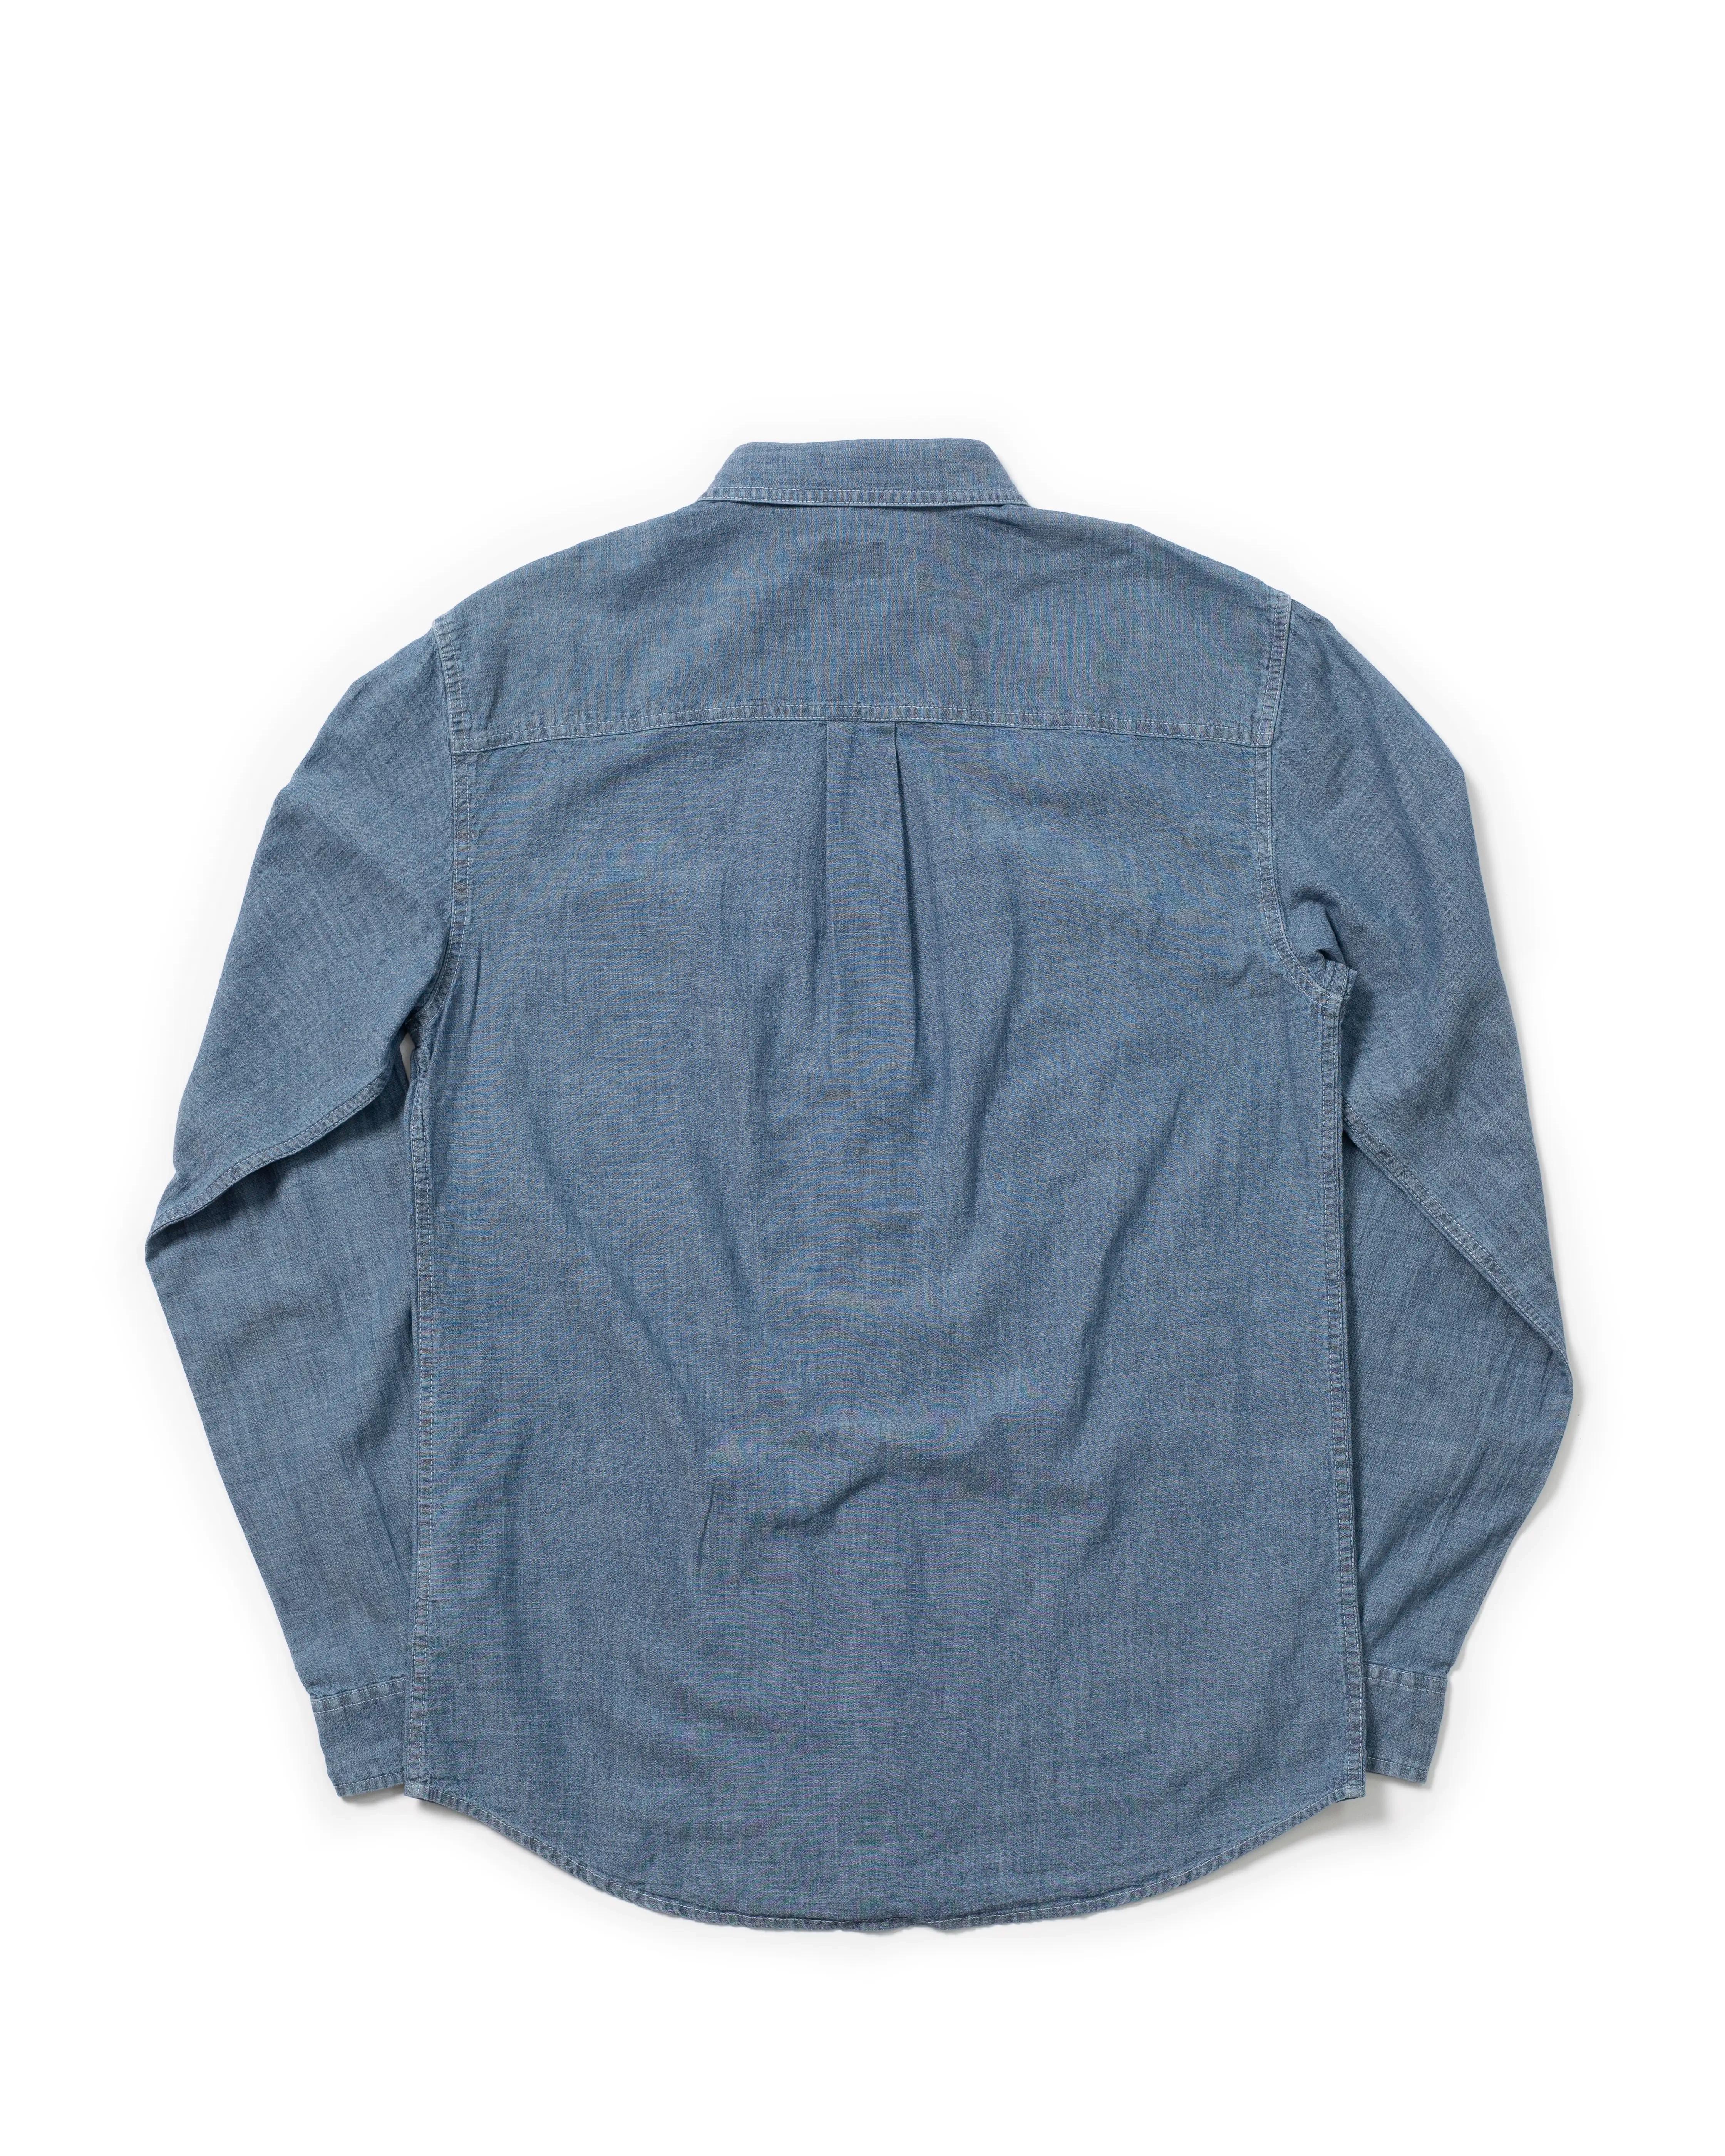 Uppity L/S Shirt - Dark Blue Chambray | DePalma Workwear